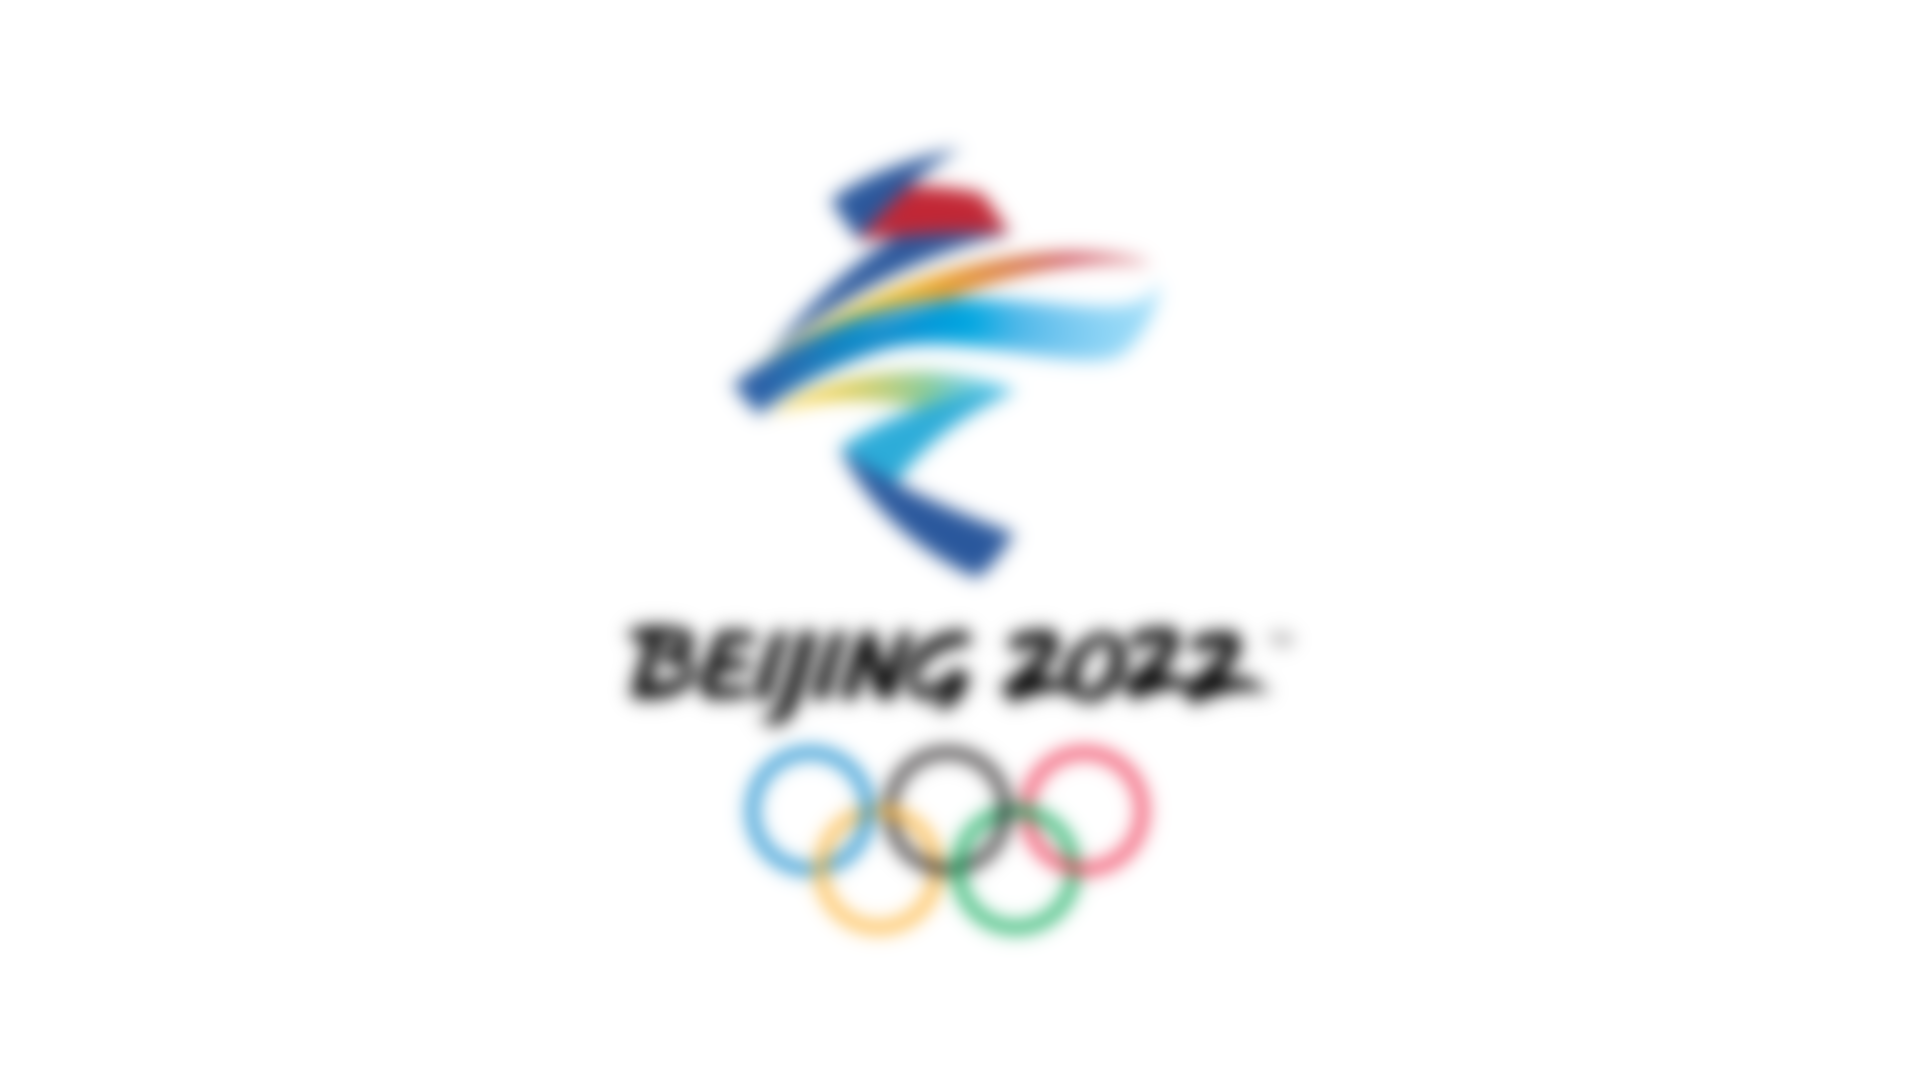 Beijing 2022 Emblem